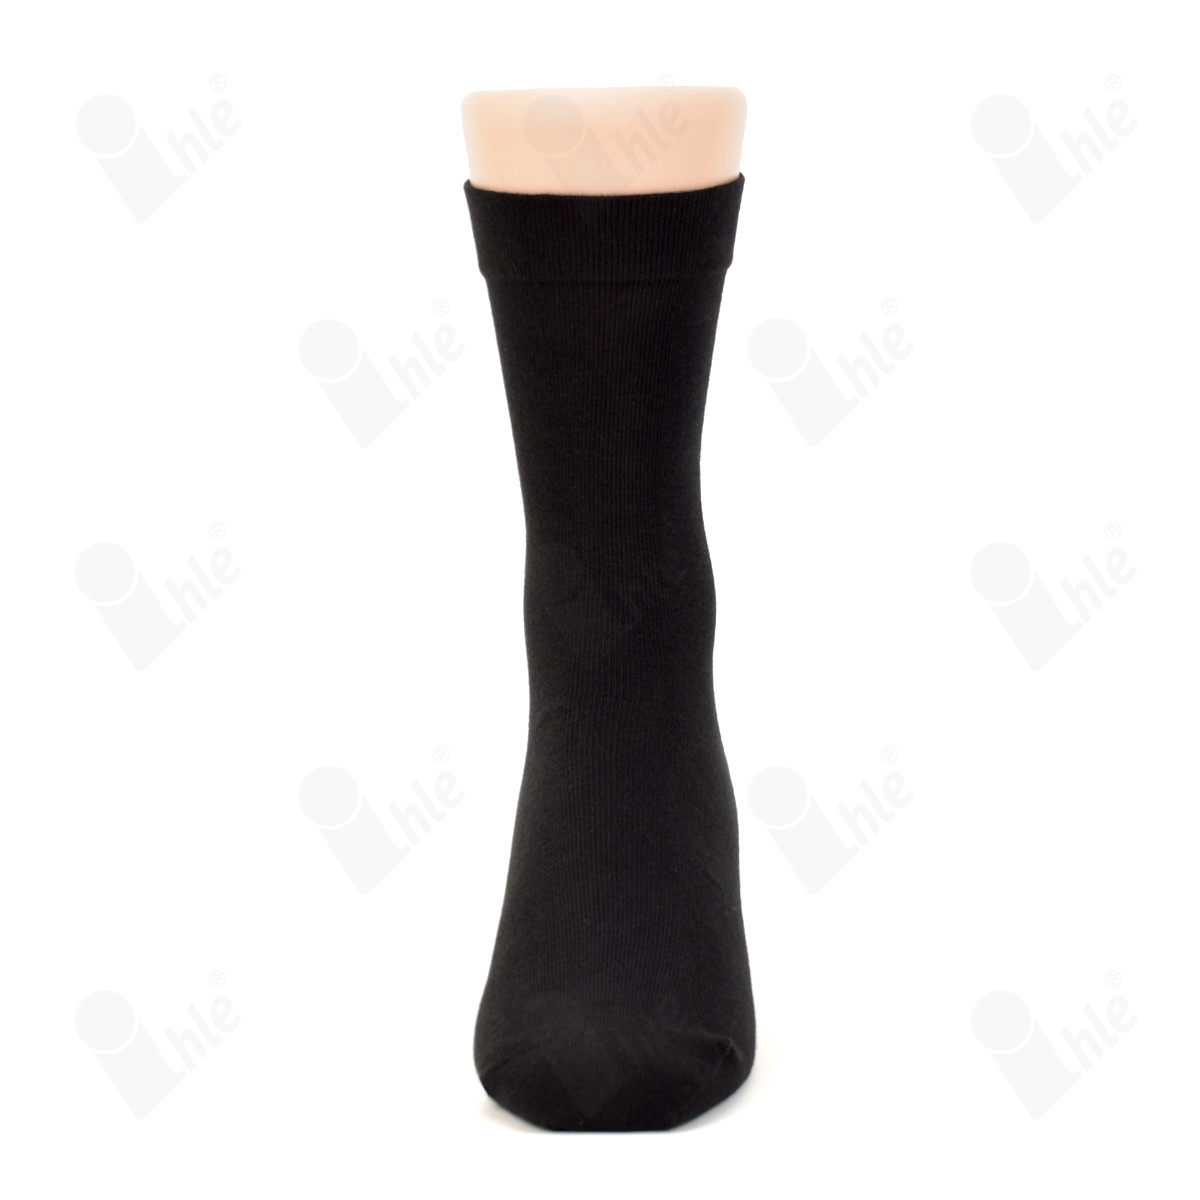 Ihle Socke klassisch schwarz Gr. 39-42